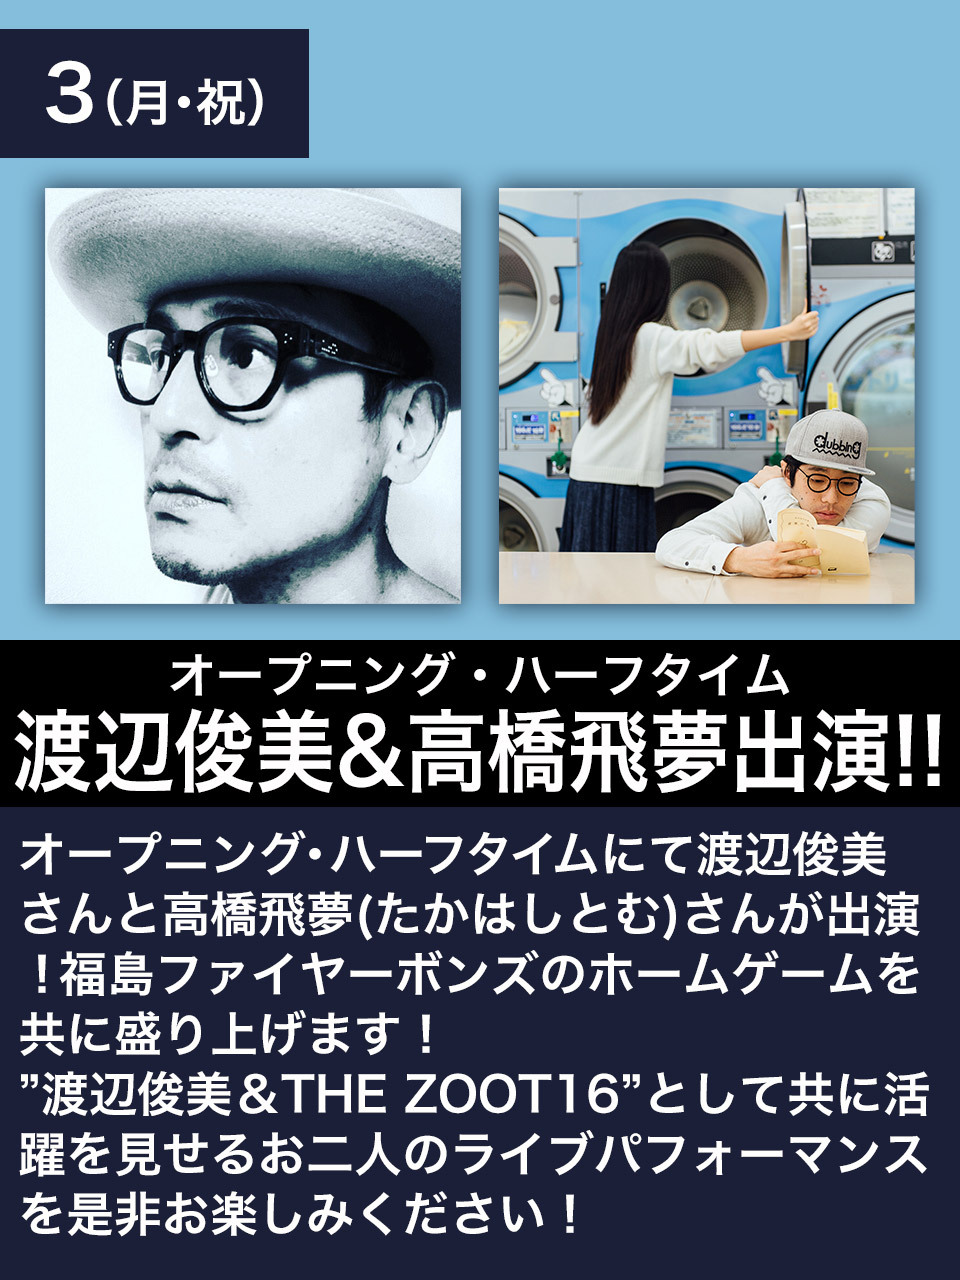 https://blog.kanko-koriyama.gr.jp/event/Files/2021/04/23/2020-21-WEB-EVENT-TOSHIMI-TOM.jpg